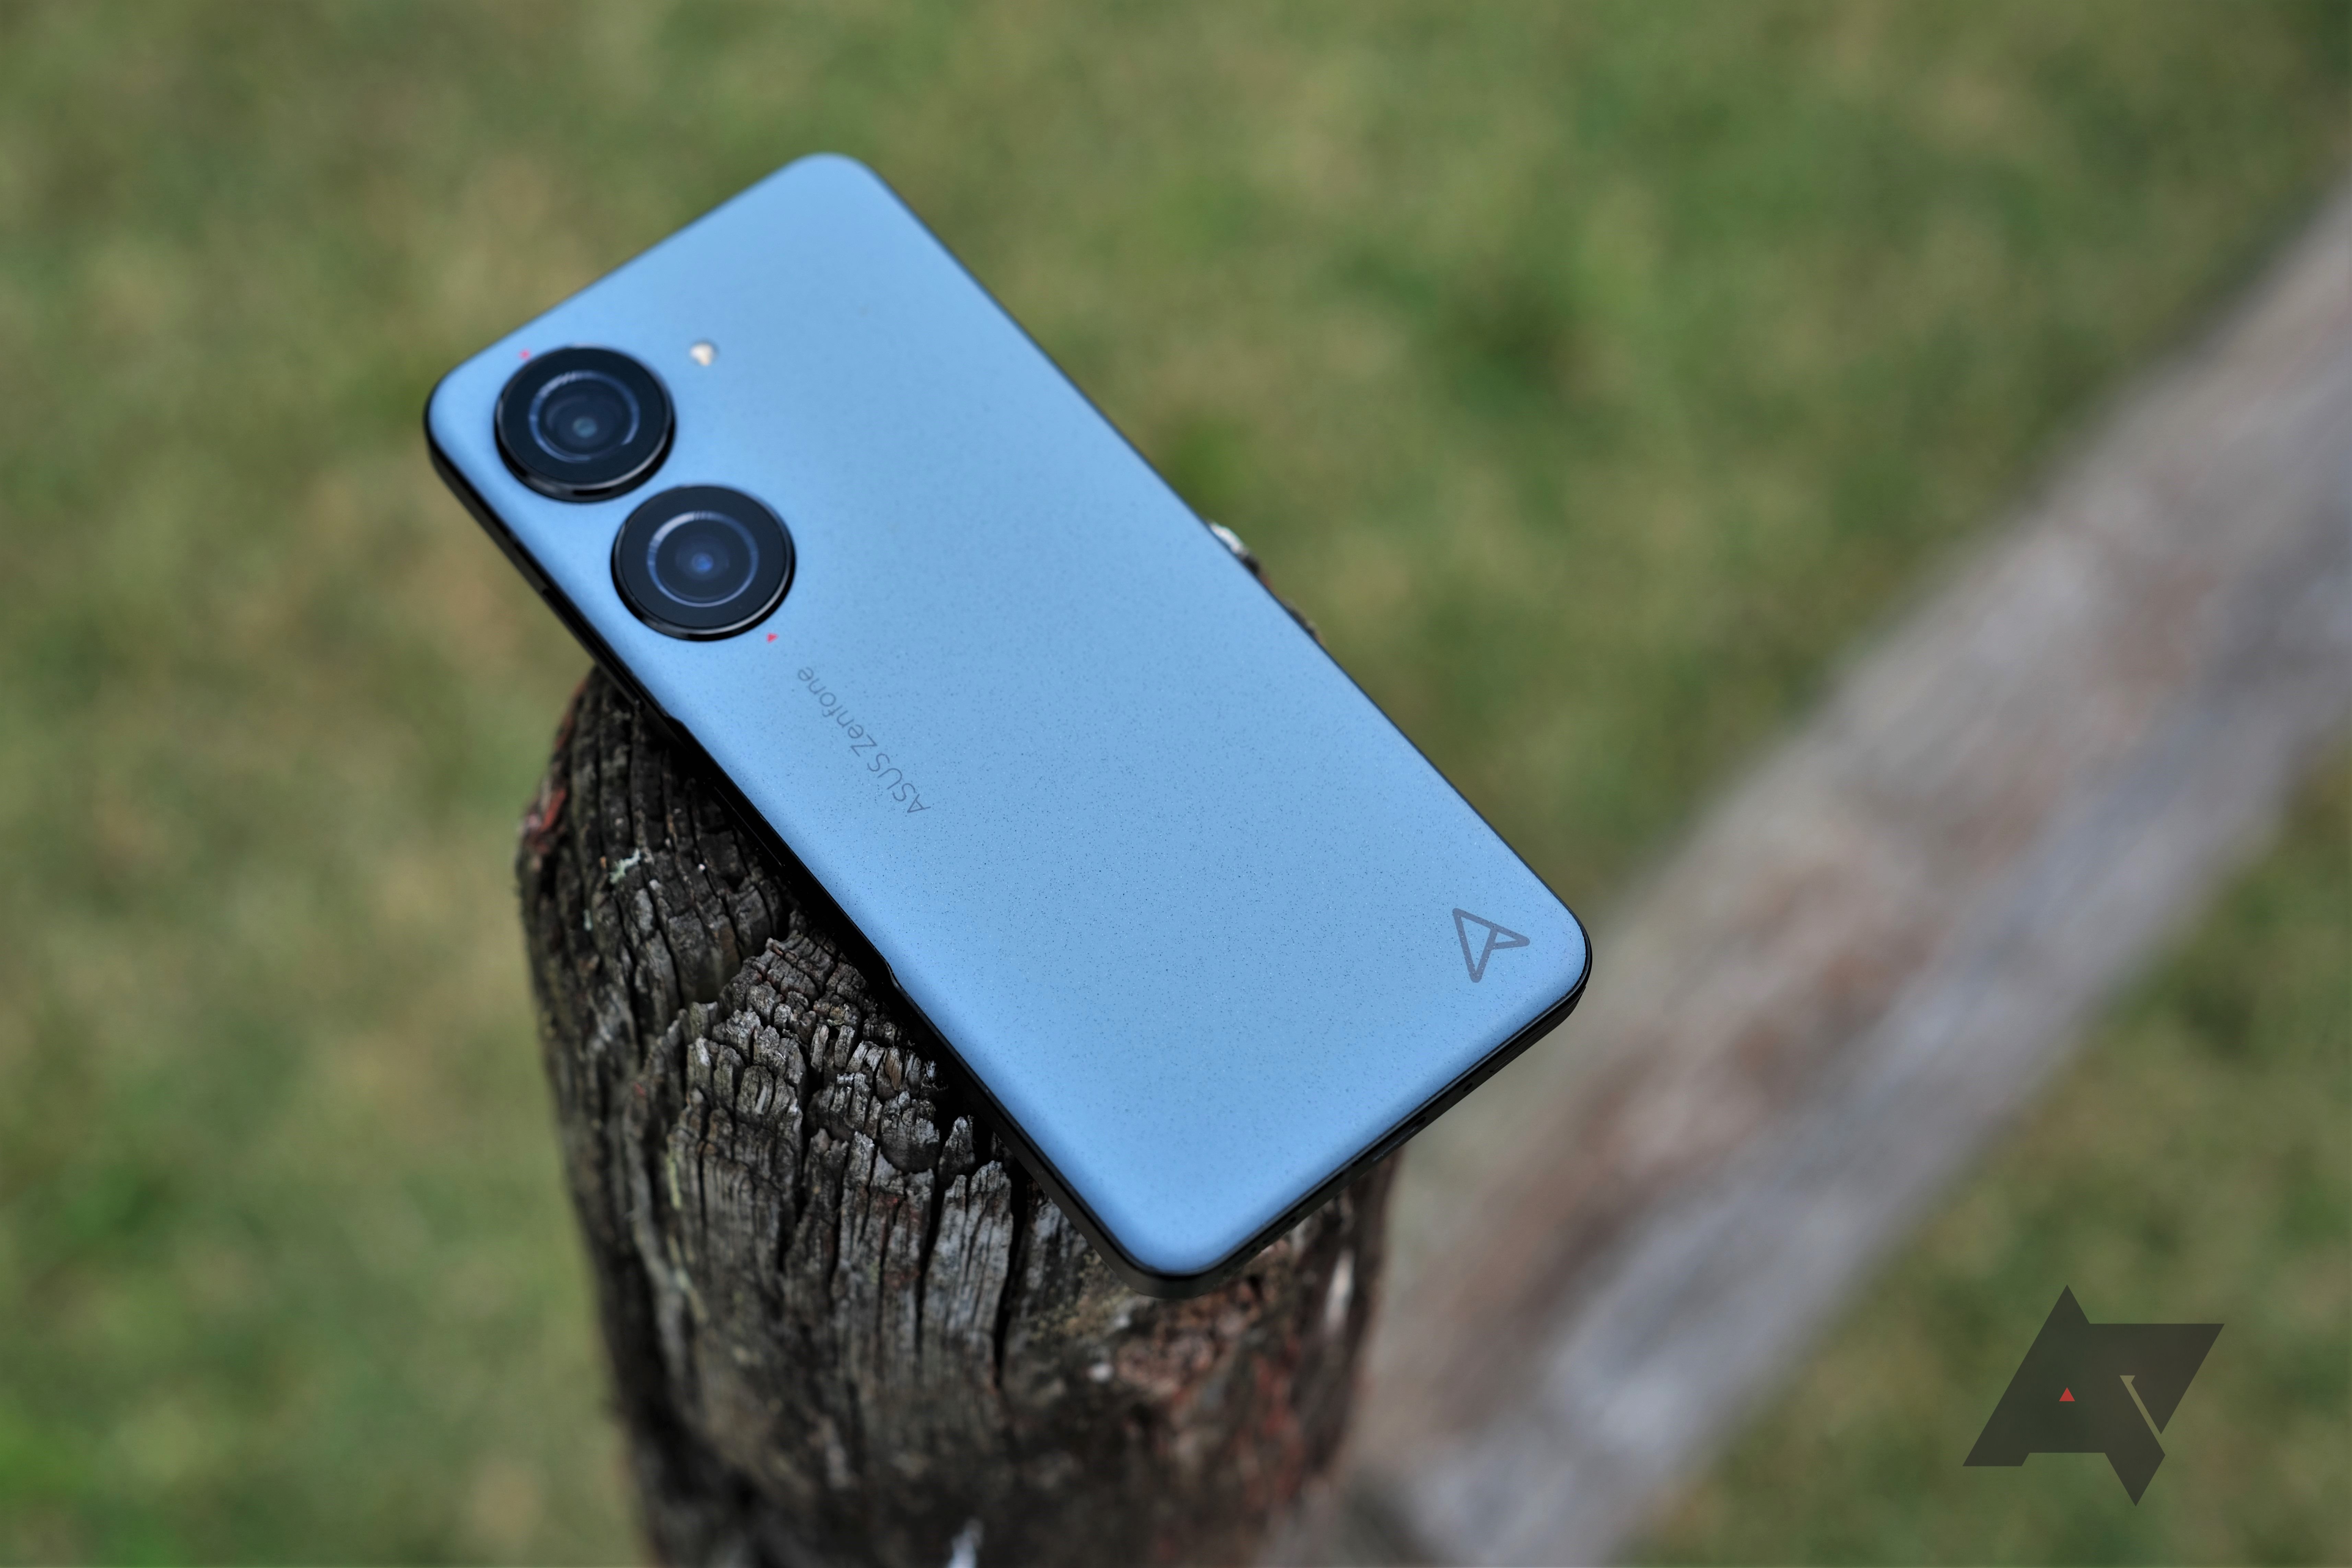 ASUS Zenfone 10 Phone Review